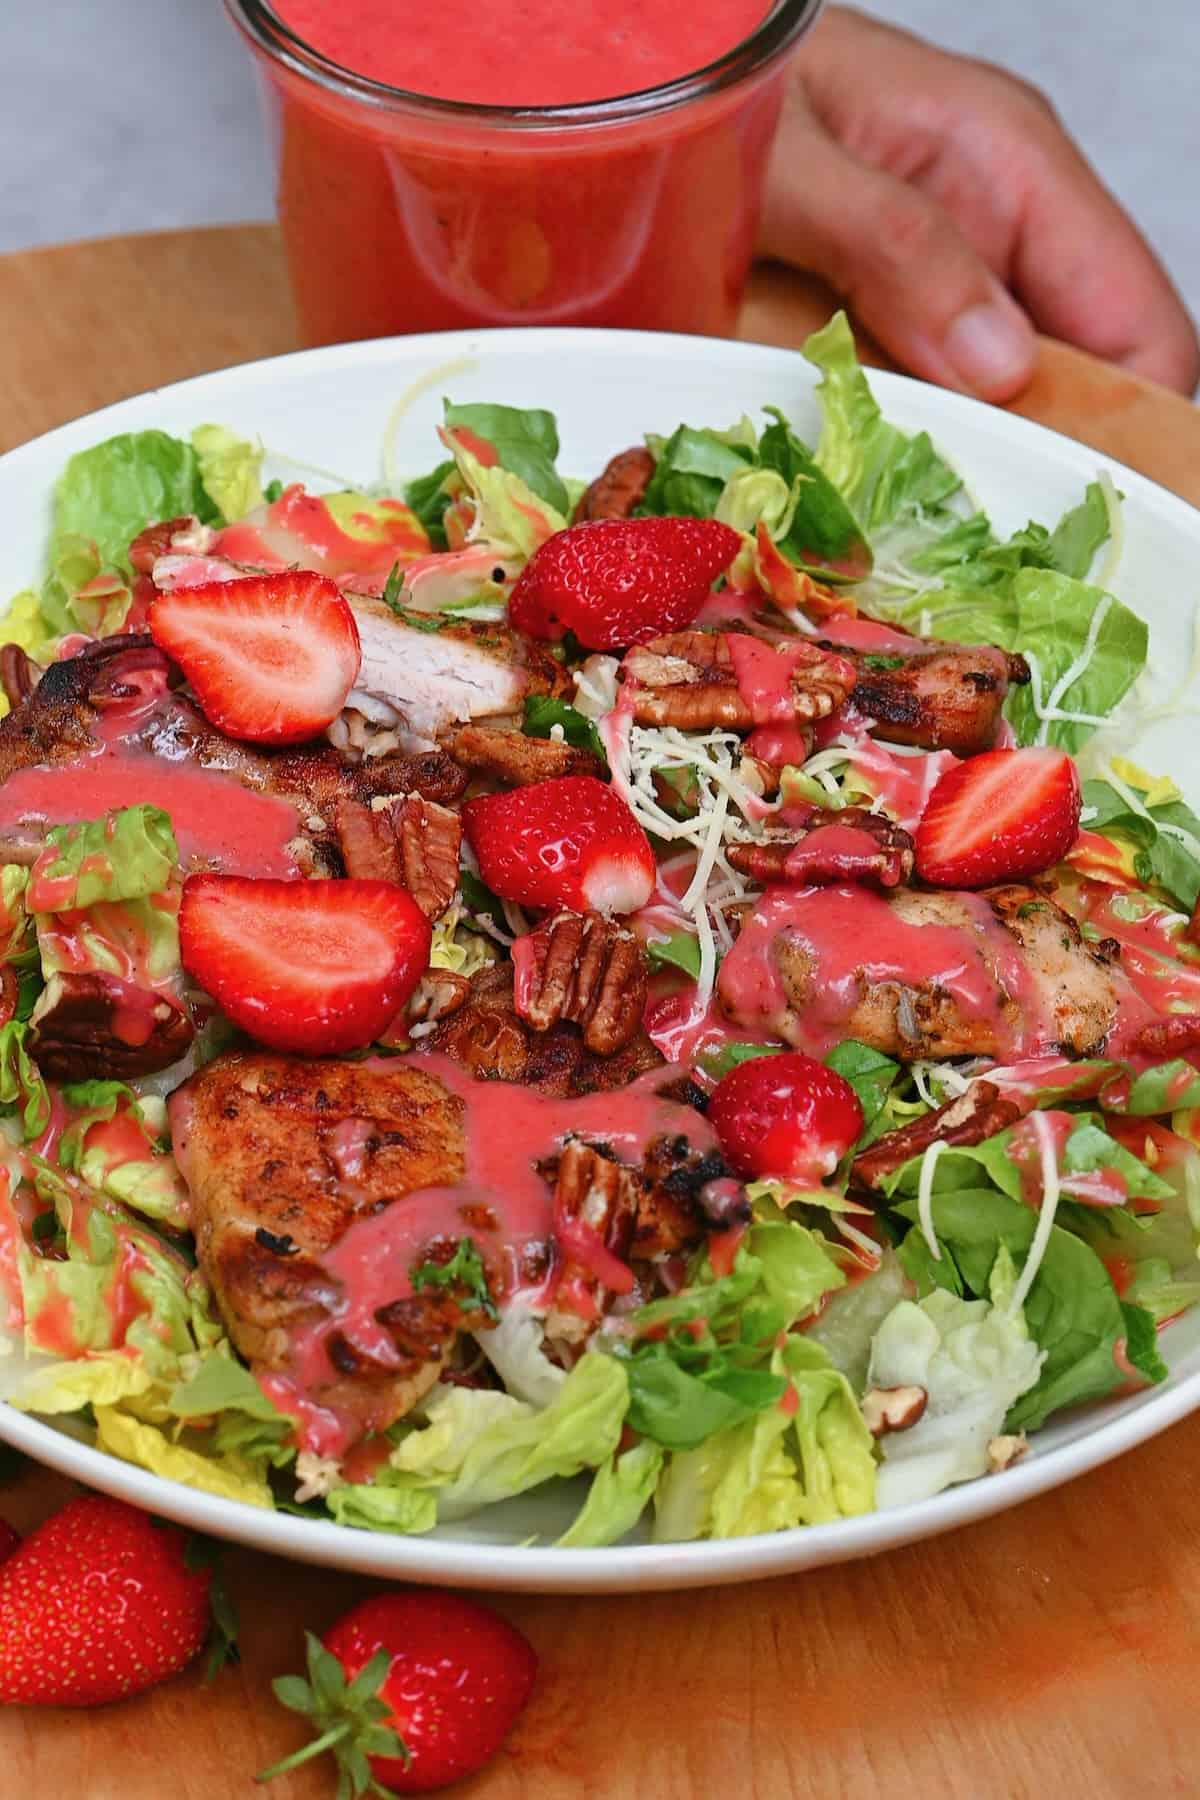 A fresh salad with strawberry vinaigrette